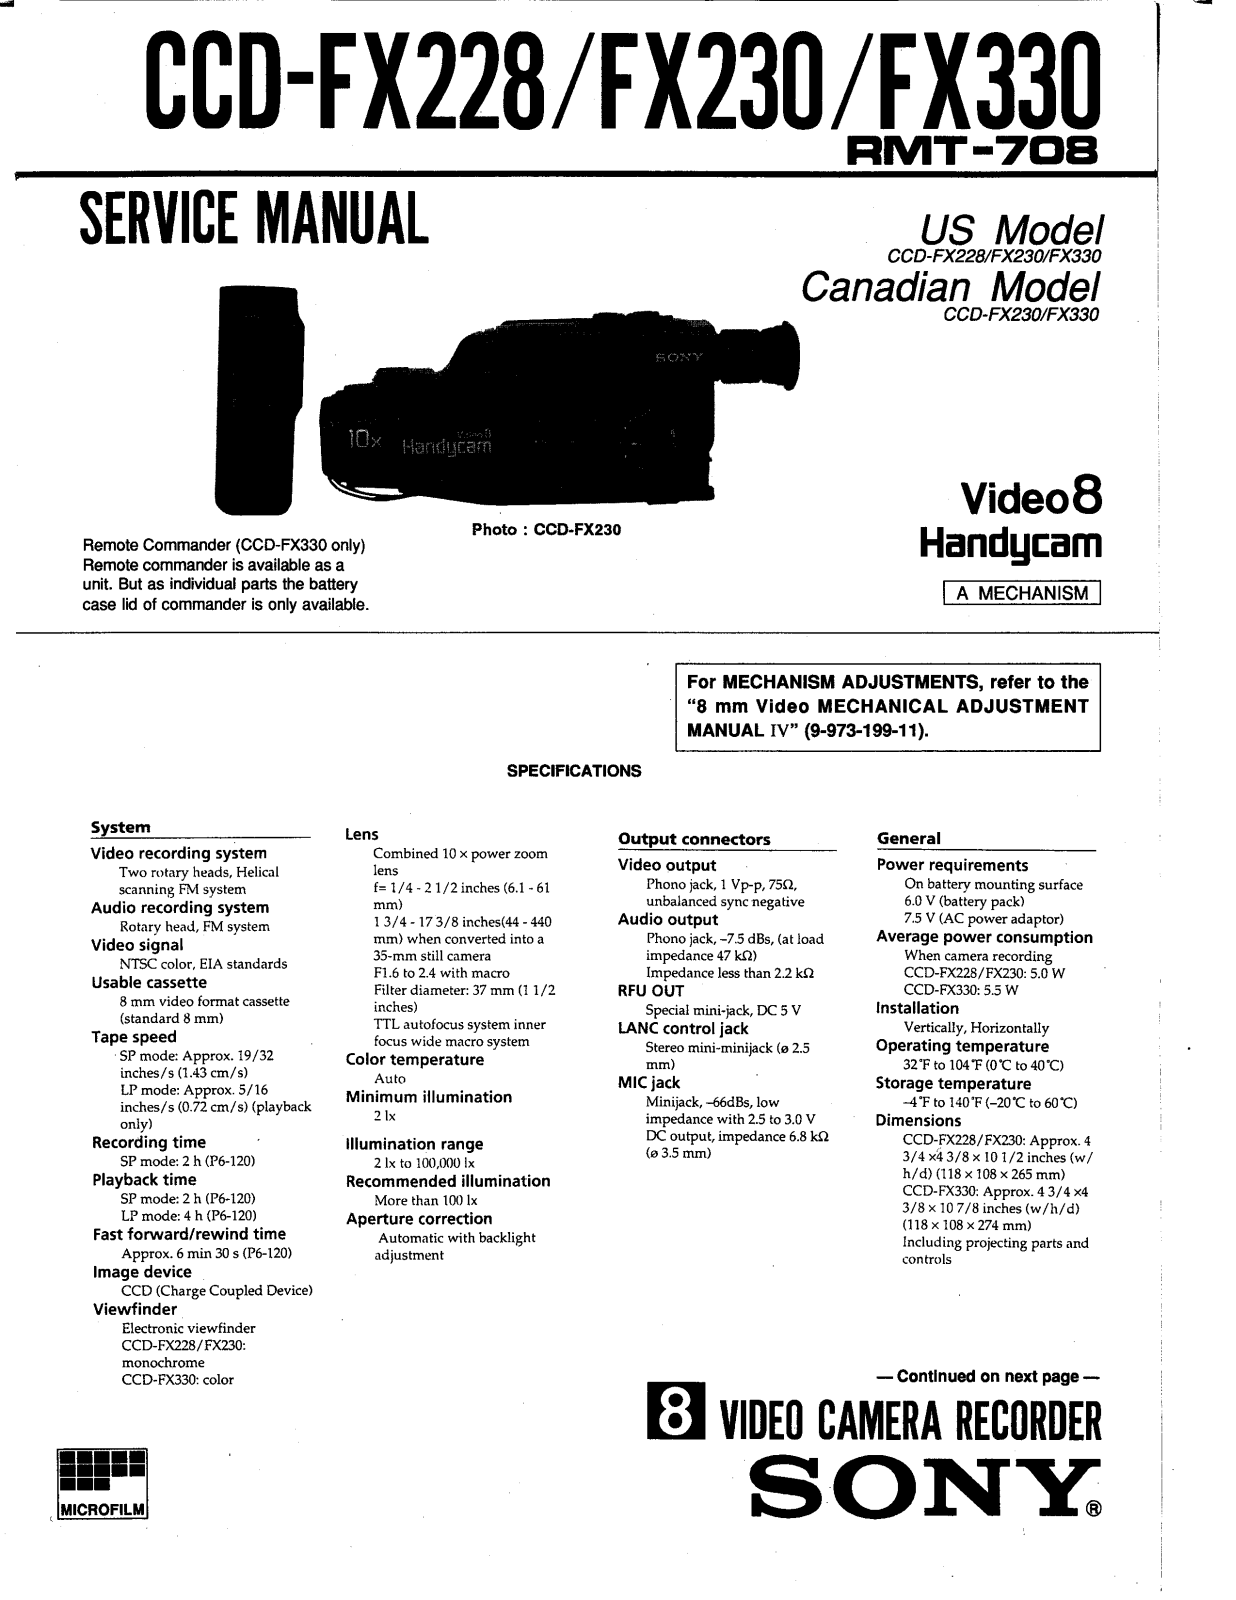 Sony ccd-fx228, ccd-fx230, ccd-fx330 Service Manual